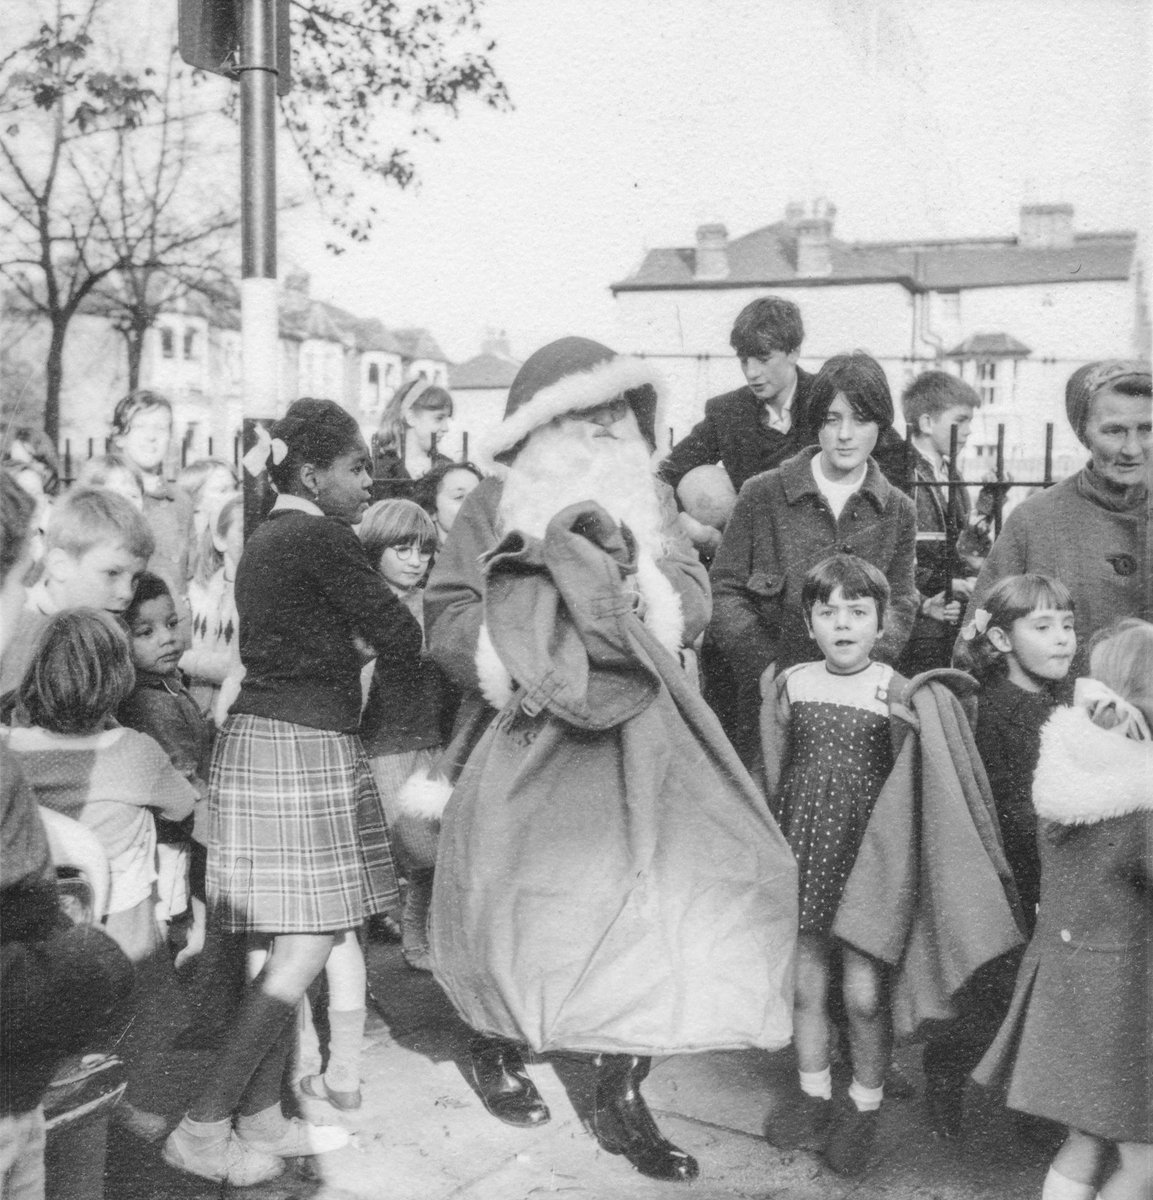 Father Christmas visits Peckham, 1966

#ArchiveAdventCalendar #HBAHFestivities #JonesAndHiggins #Peckham #Christmas #Santa #FatherChristmas #ChristmasPast #tbt